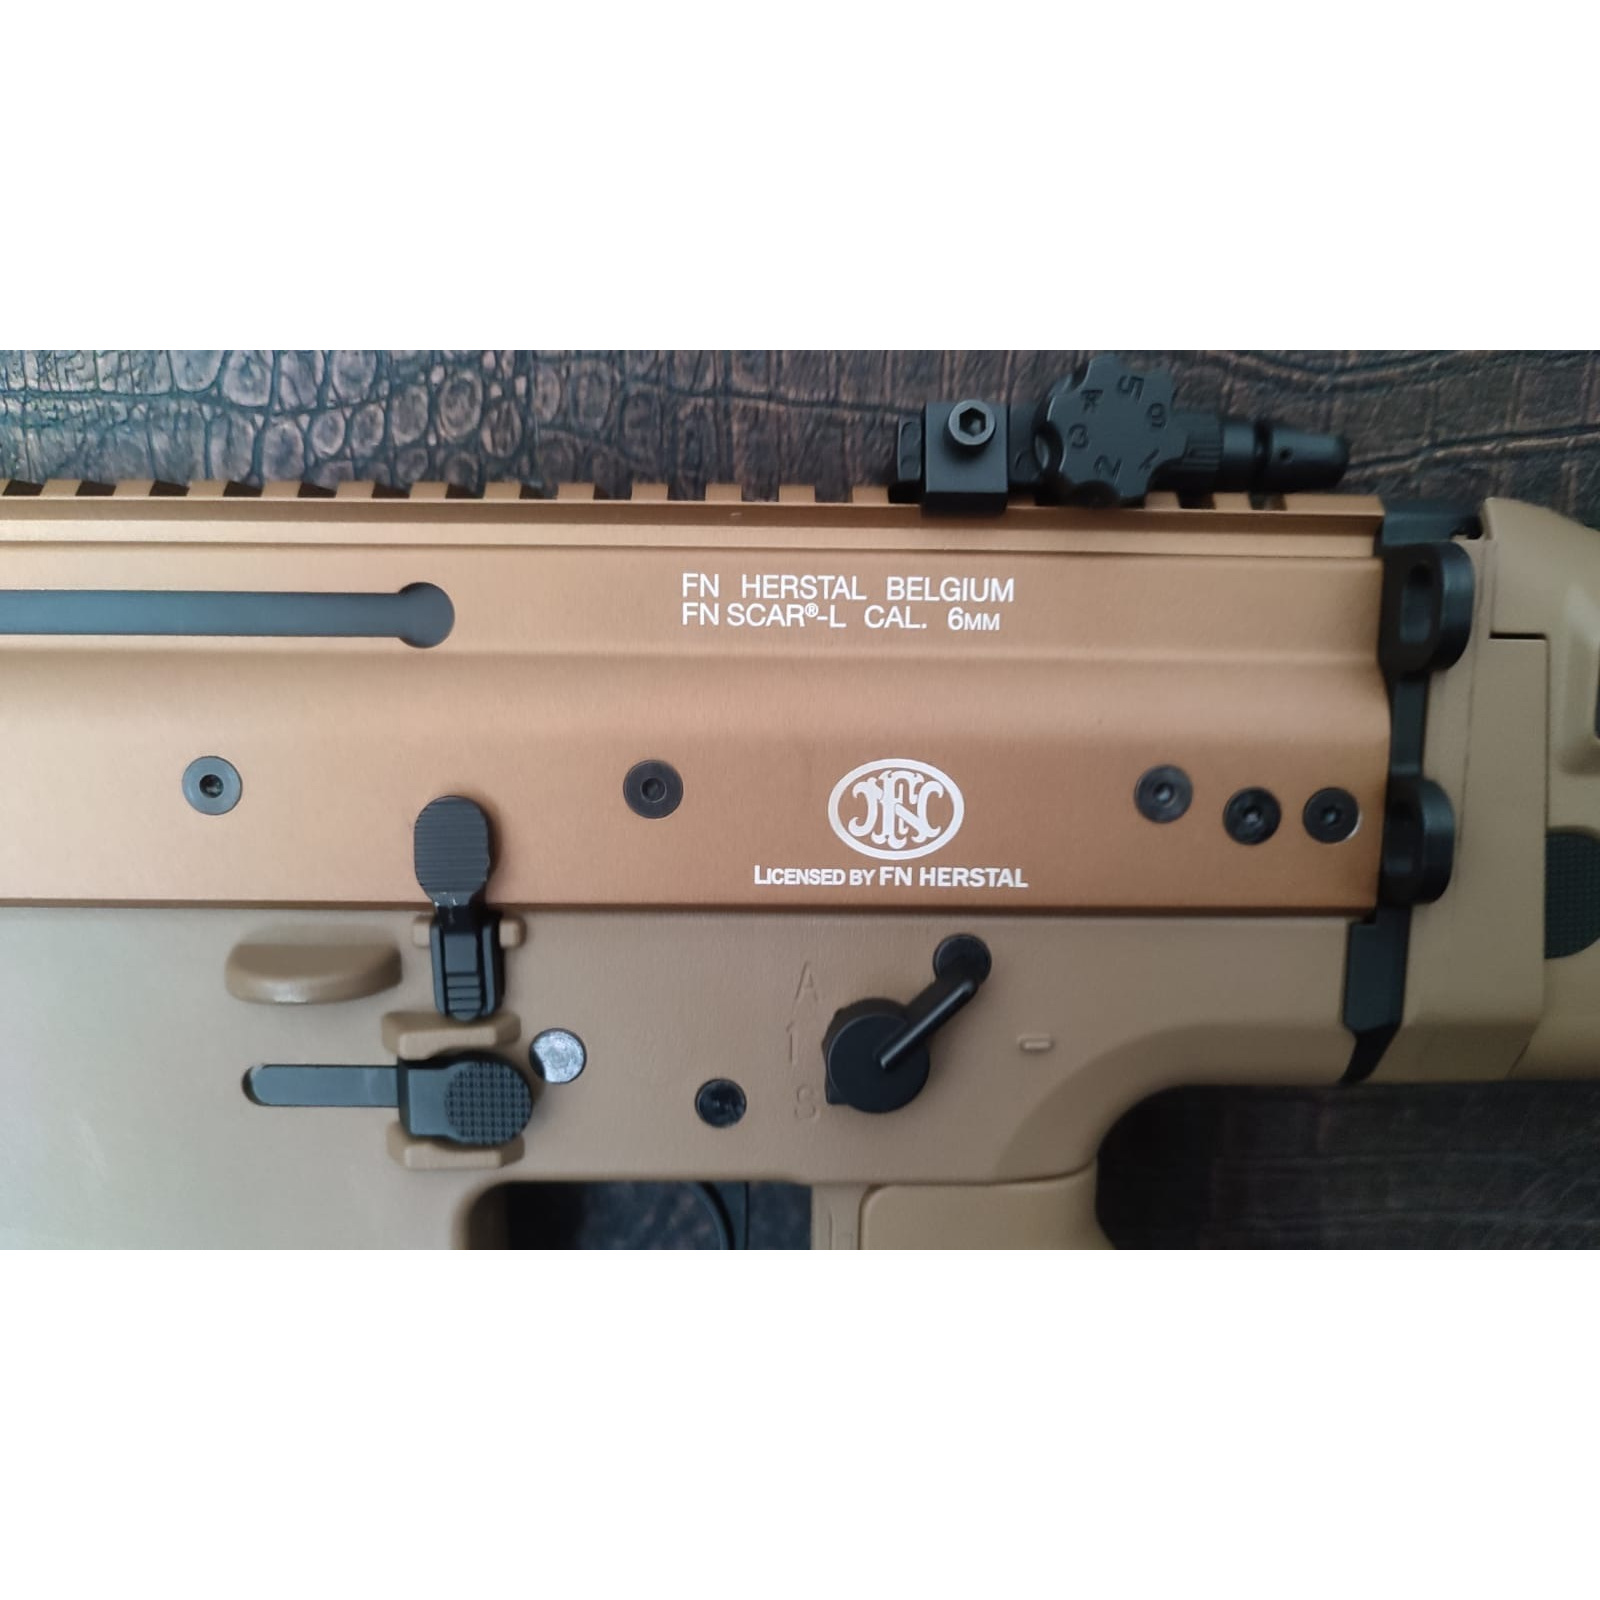 Begadi MK16 Sport S-AEG / FN Herstal SCAR-L Lizenz TAN  